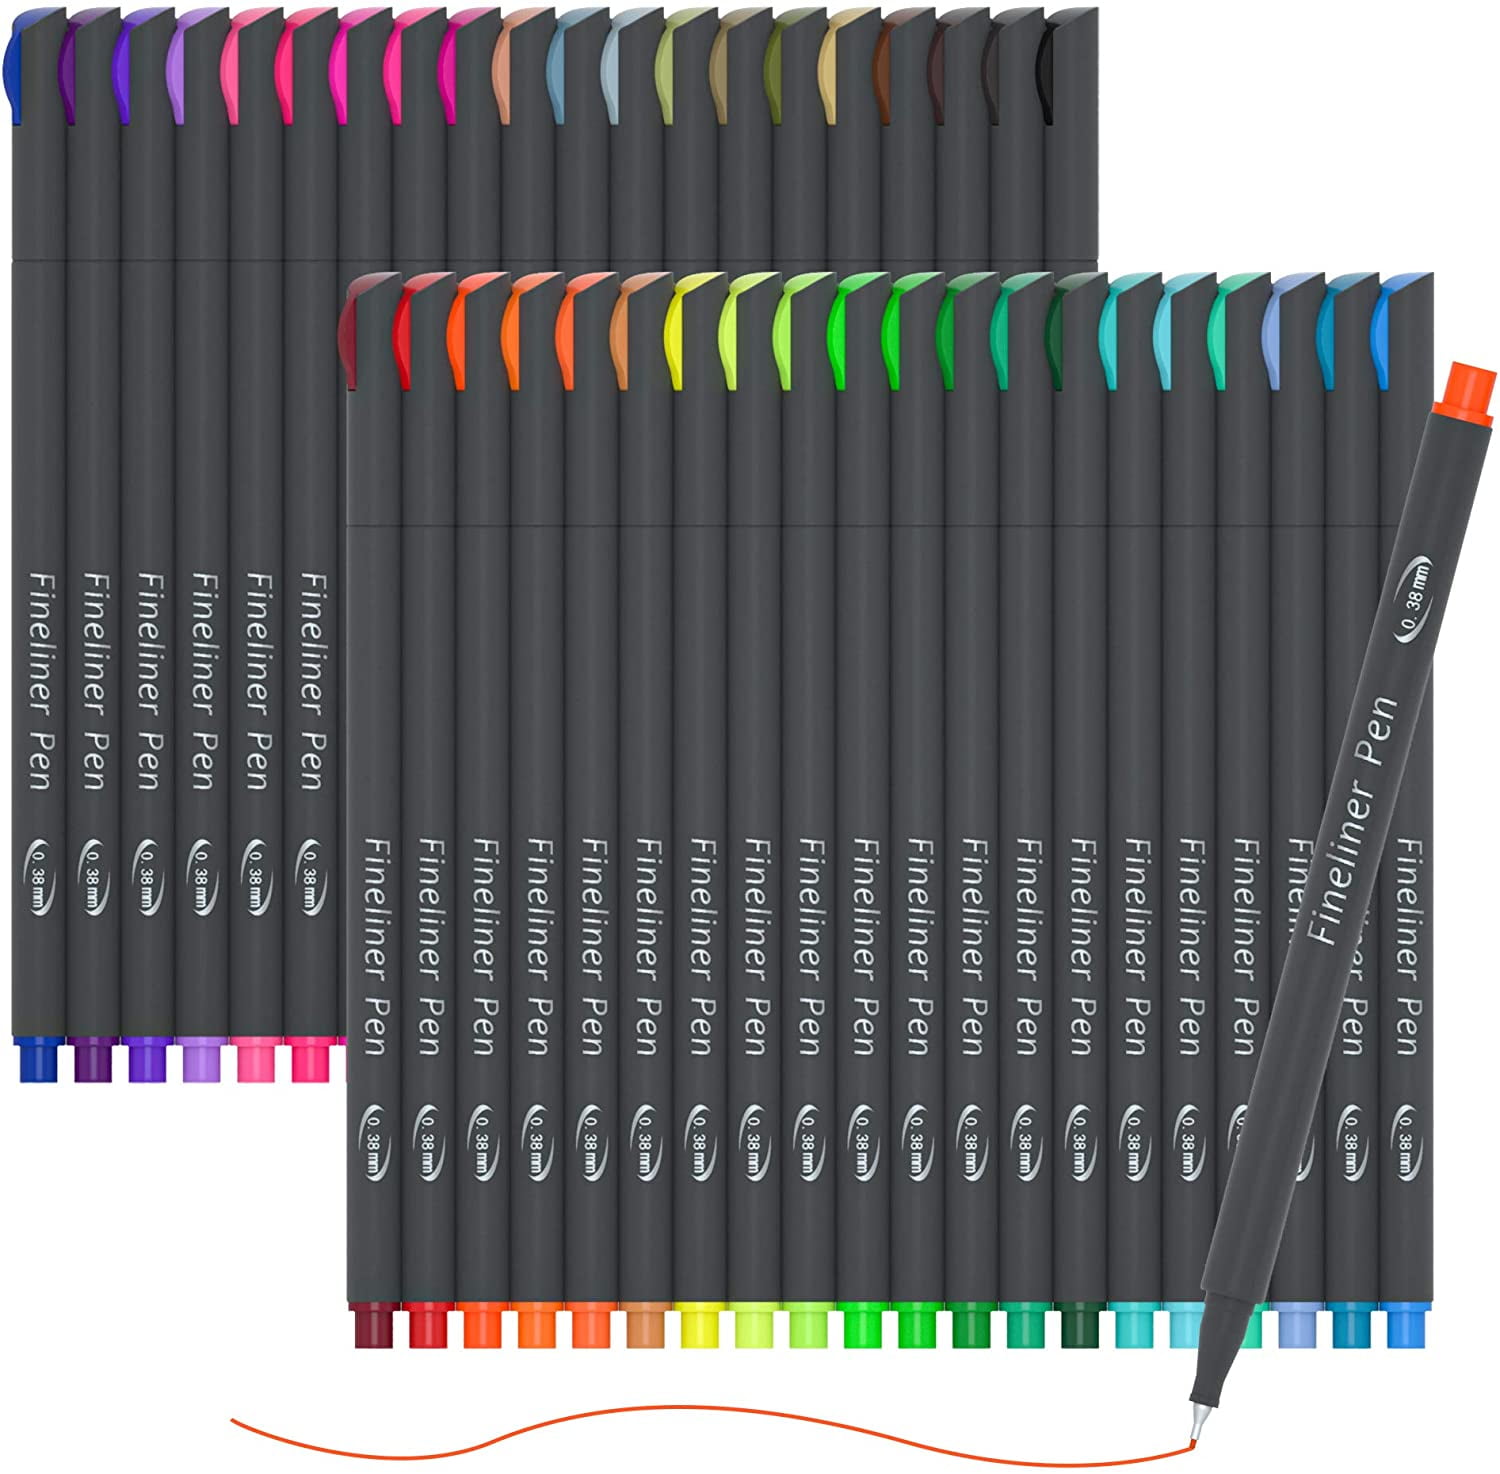 Vanstek 46 Pack Journal Planner Colored Pens, Fineliner Pens for  Journaling, Wri